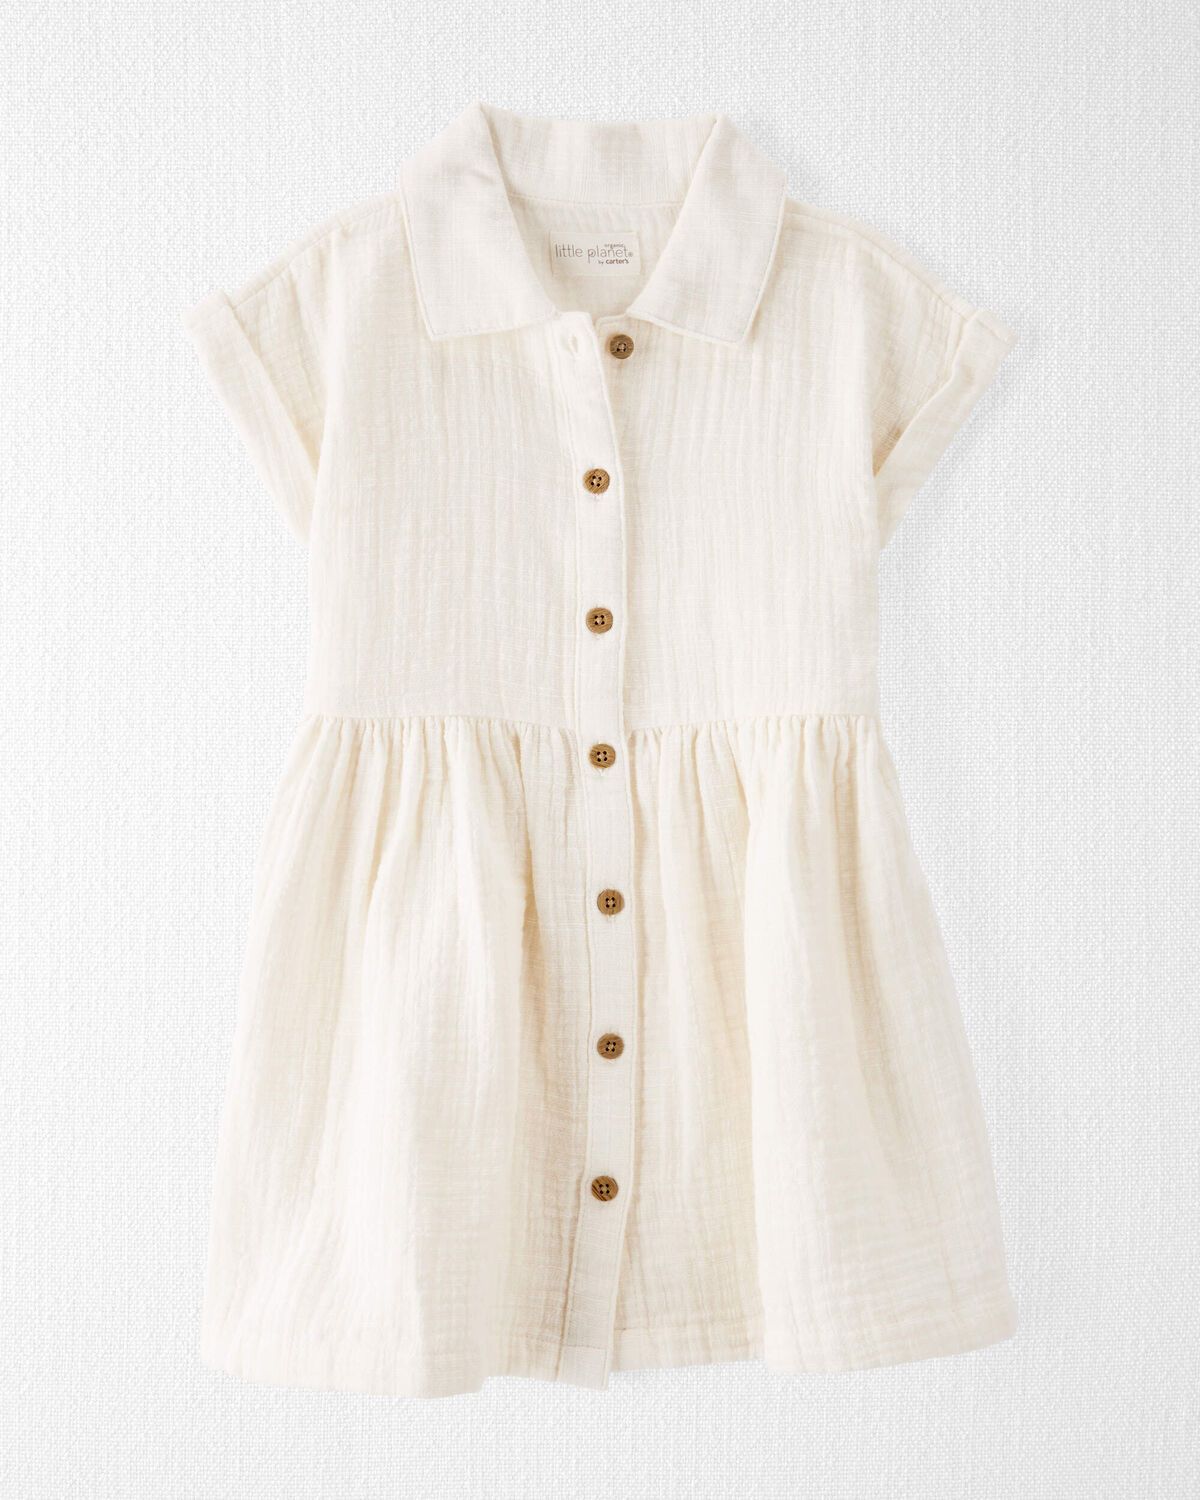 Sweet Cream Toddler Organic Cotton Button-Front Dress in Cream
 | carters.com | Carter's